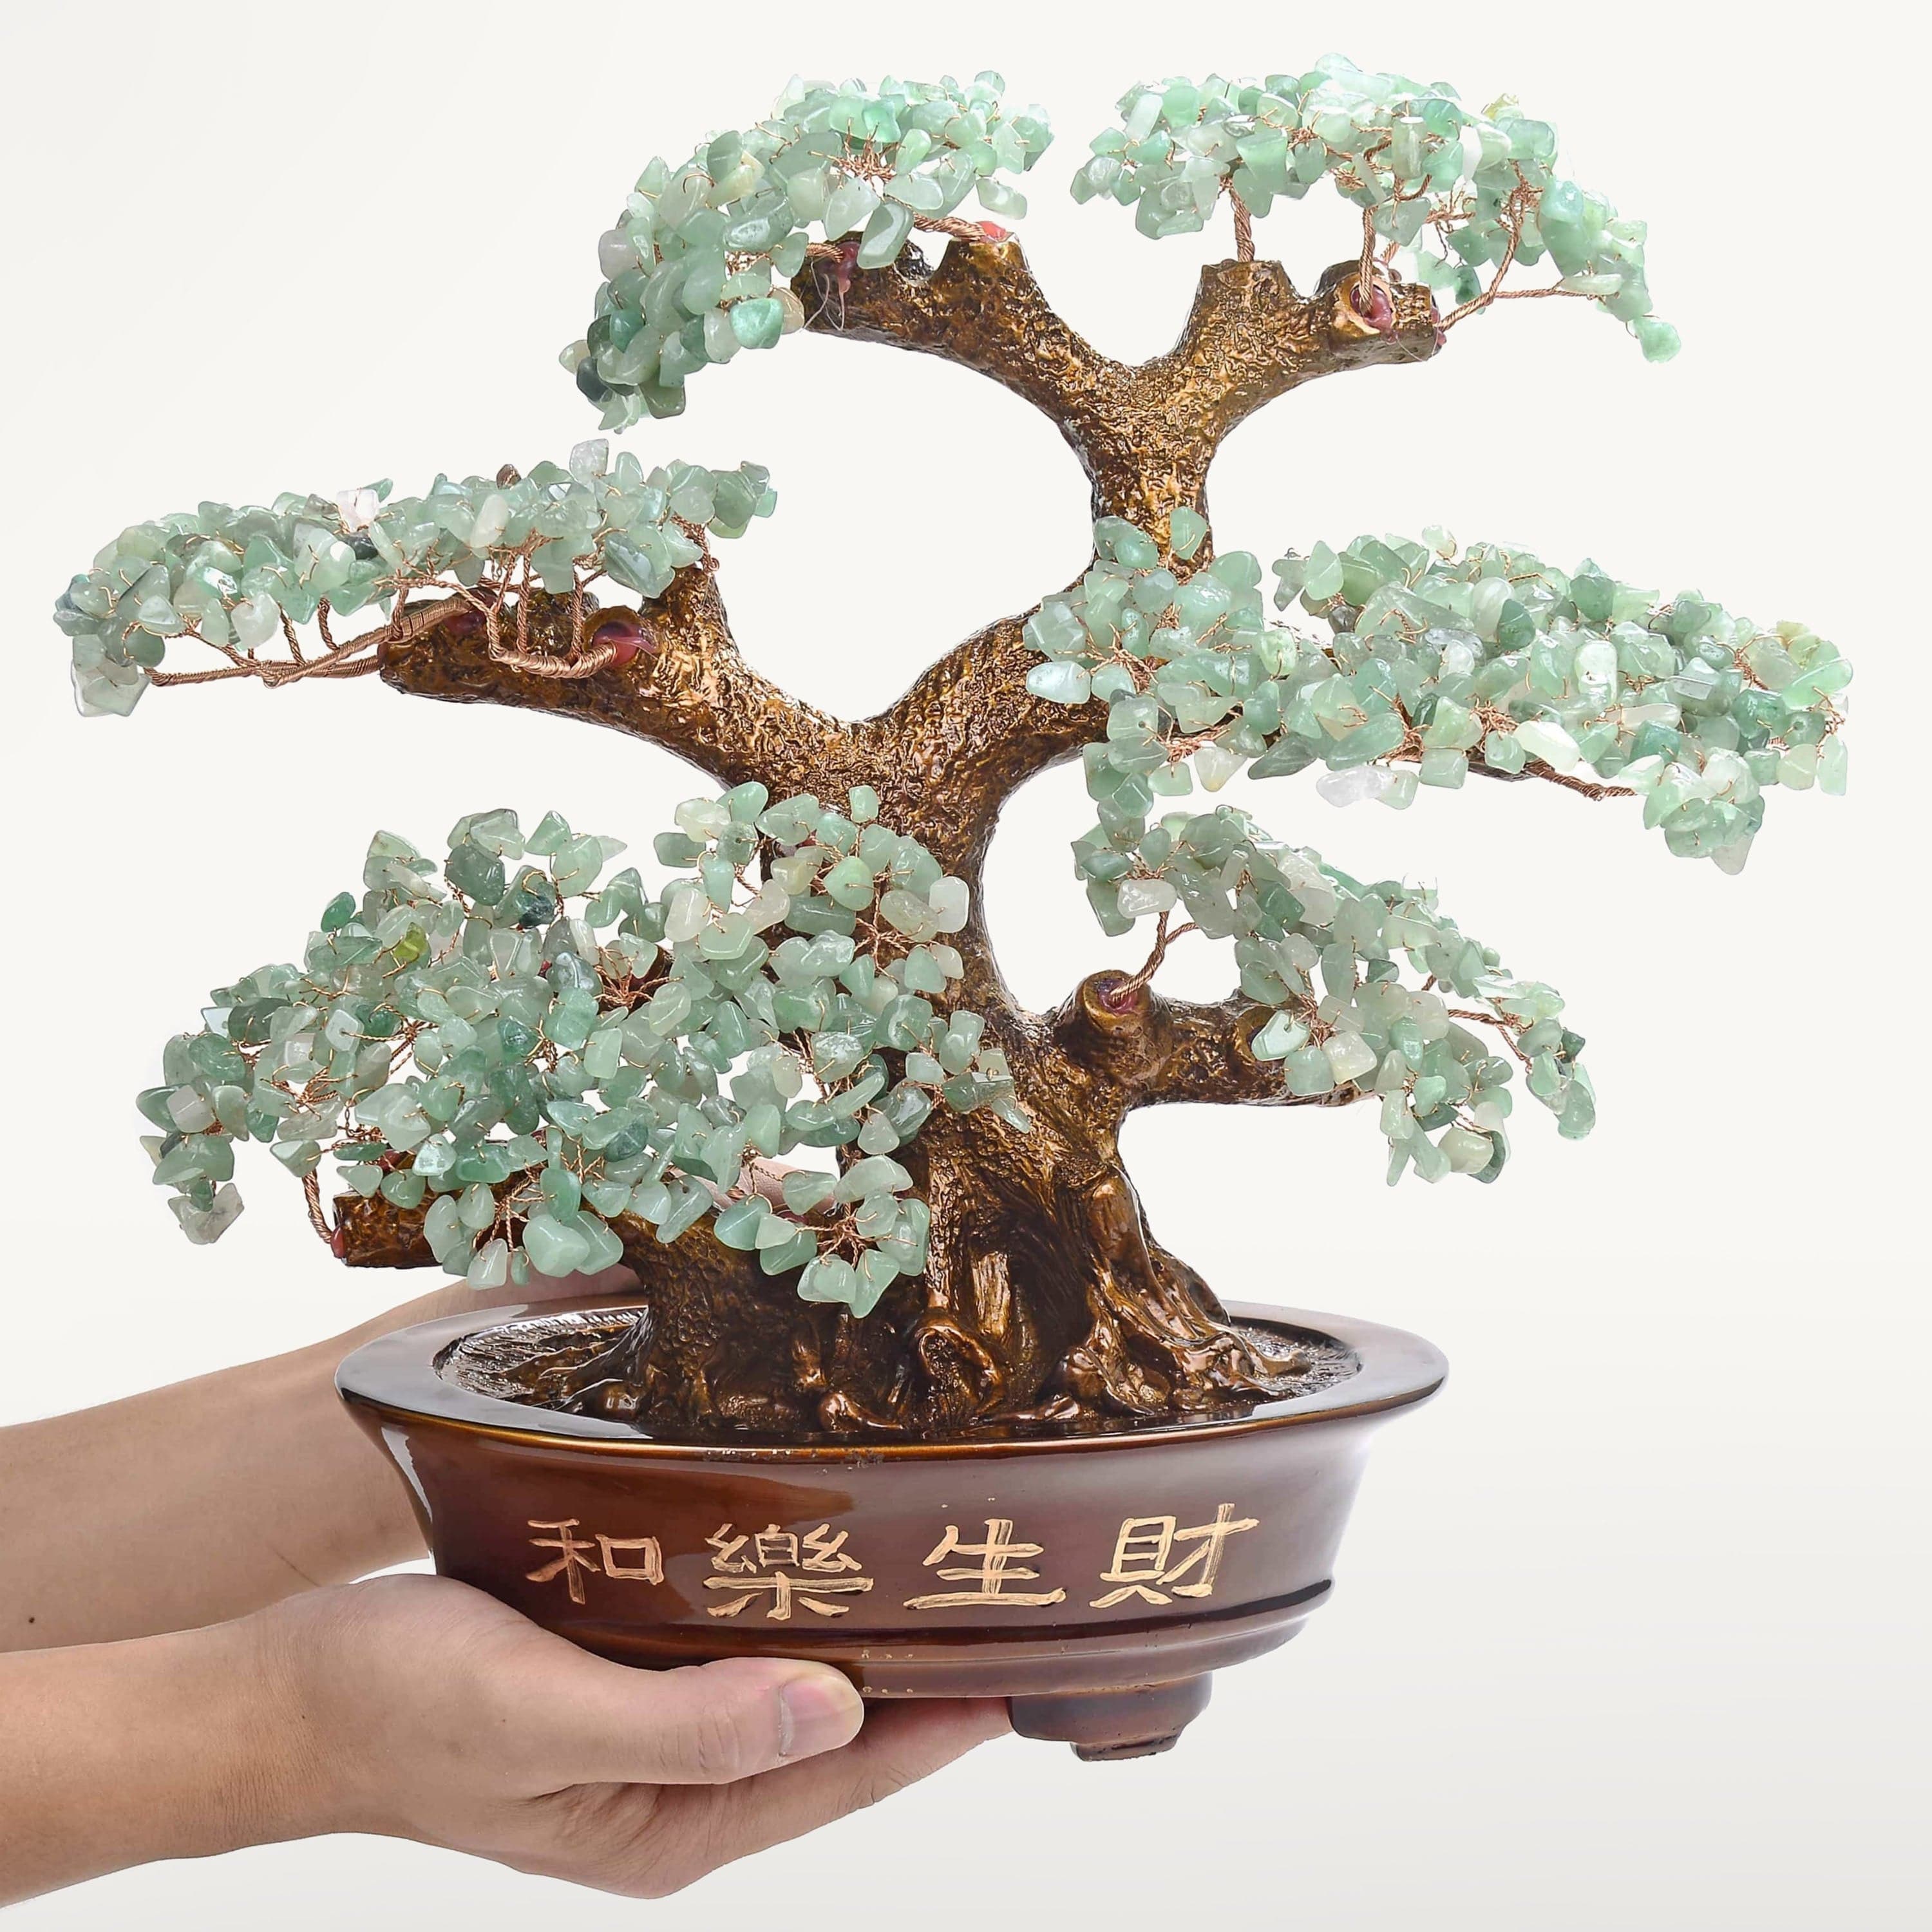 Kalifano Gemstone Trees Aventurine Bonsai Tree of Life with 1,251 Natural Gemstones K9151-AV